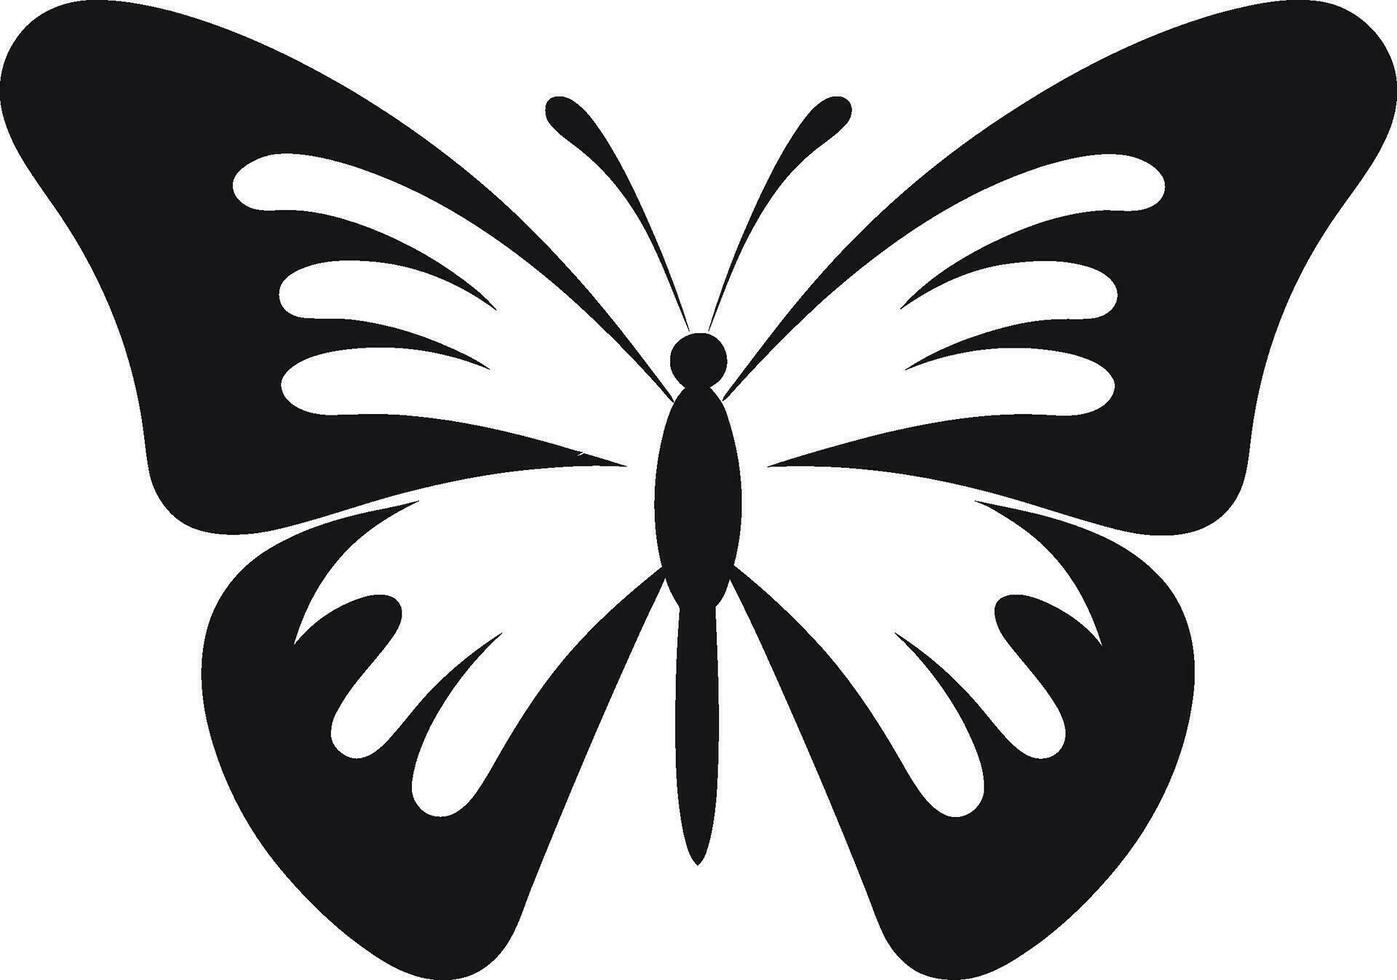 Butterfly Charm in Shadows A Timeless Design Intricate Flutter Black Butterfly Emblem vector